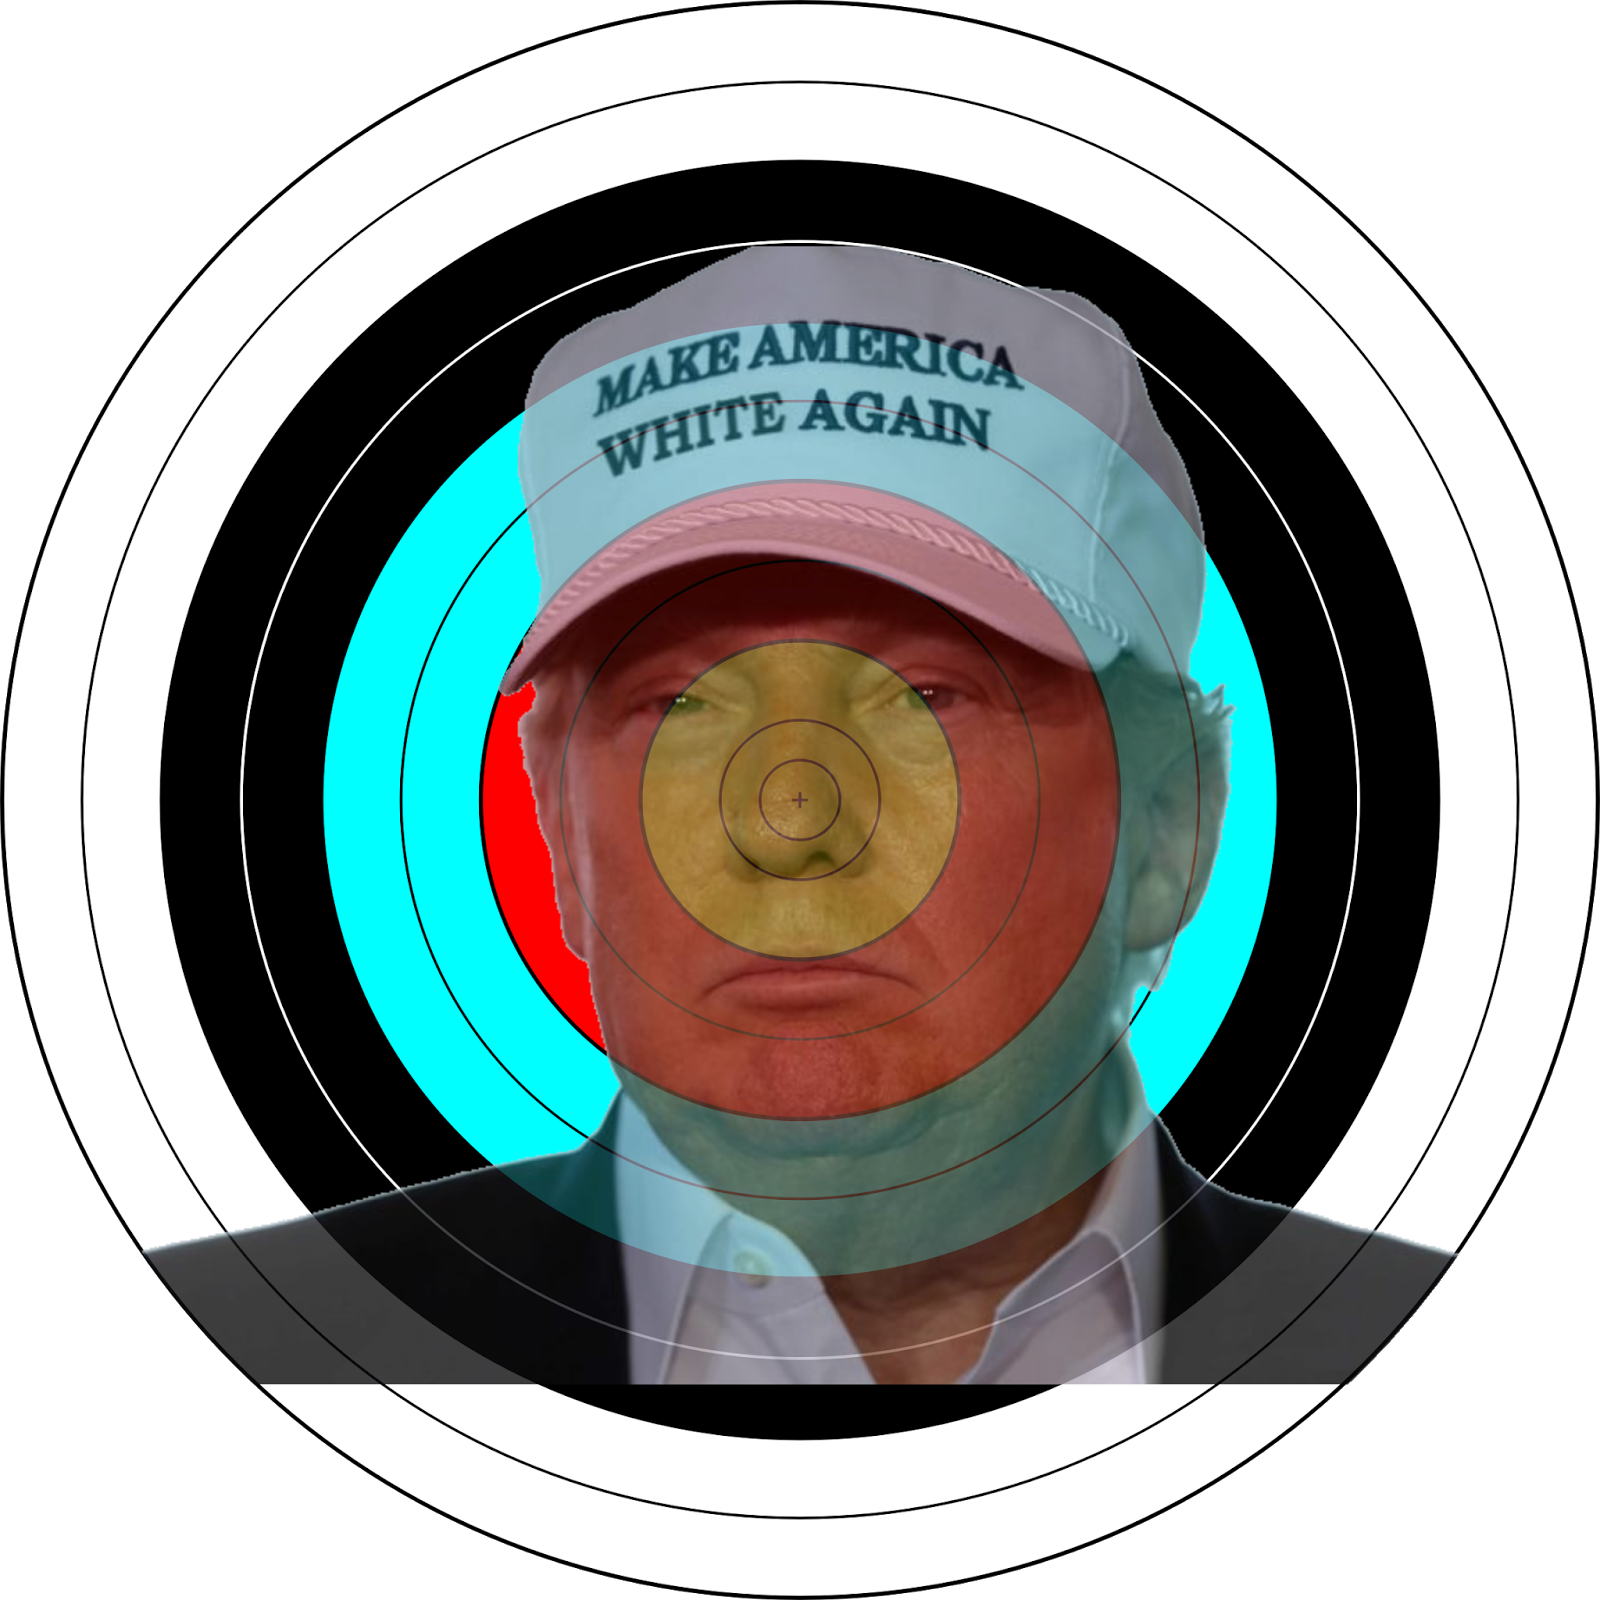 Toronto Archery: Donald Trump Archery Target